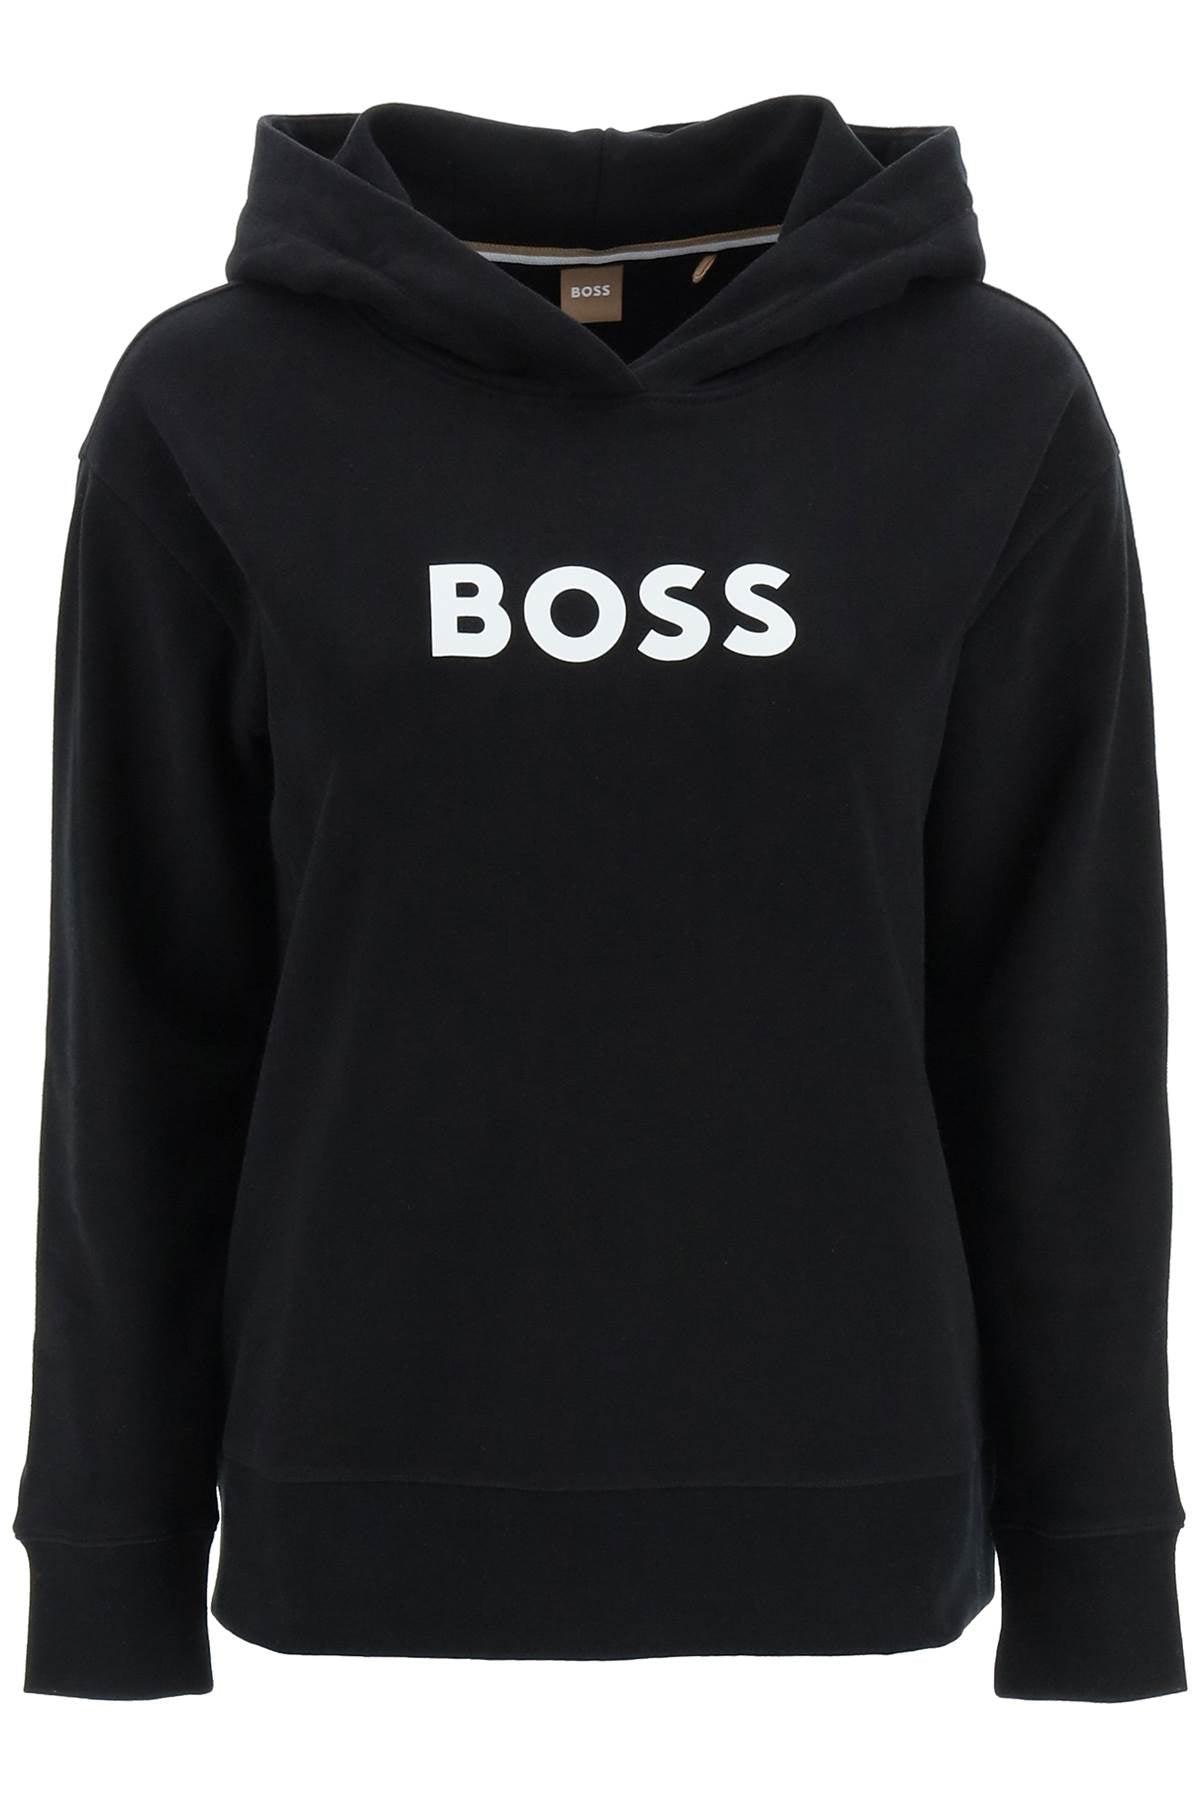 BOSS by HUGO BOSS Logo Hoodie in Black | Lyst